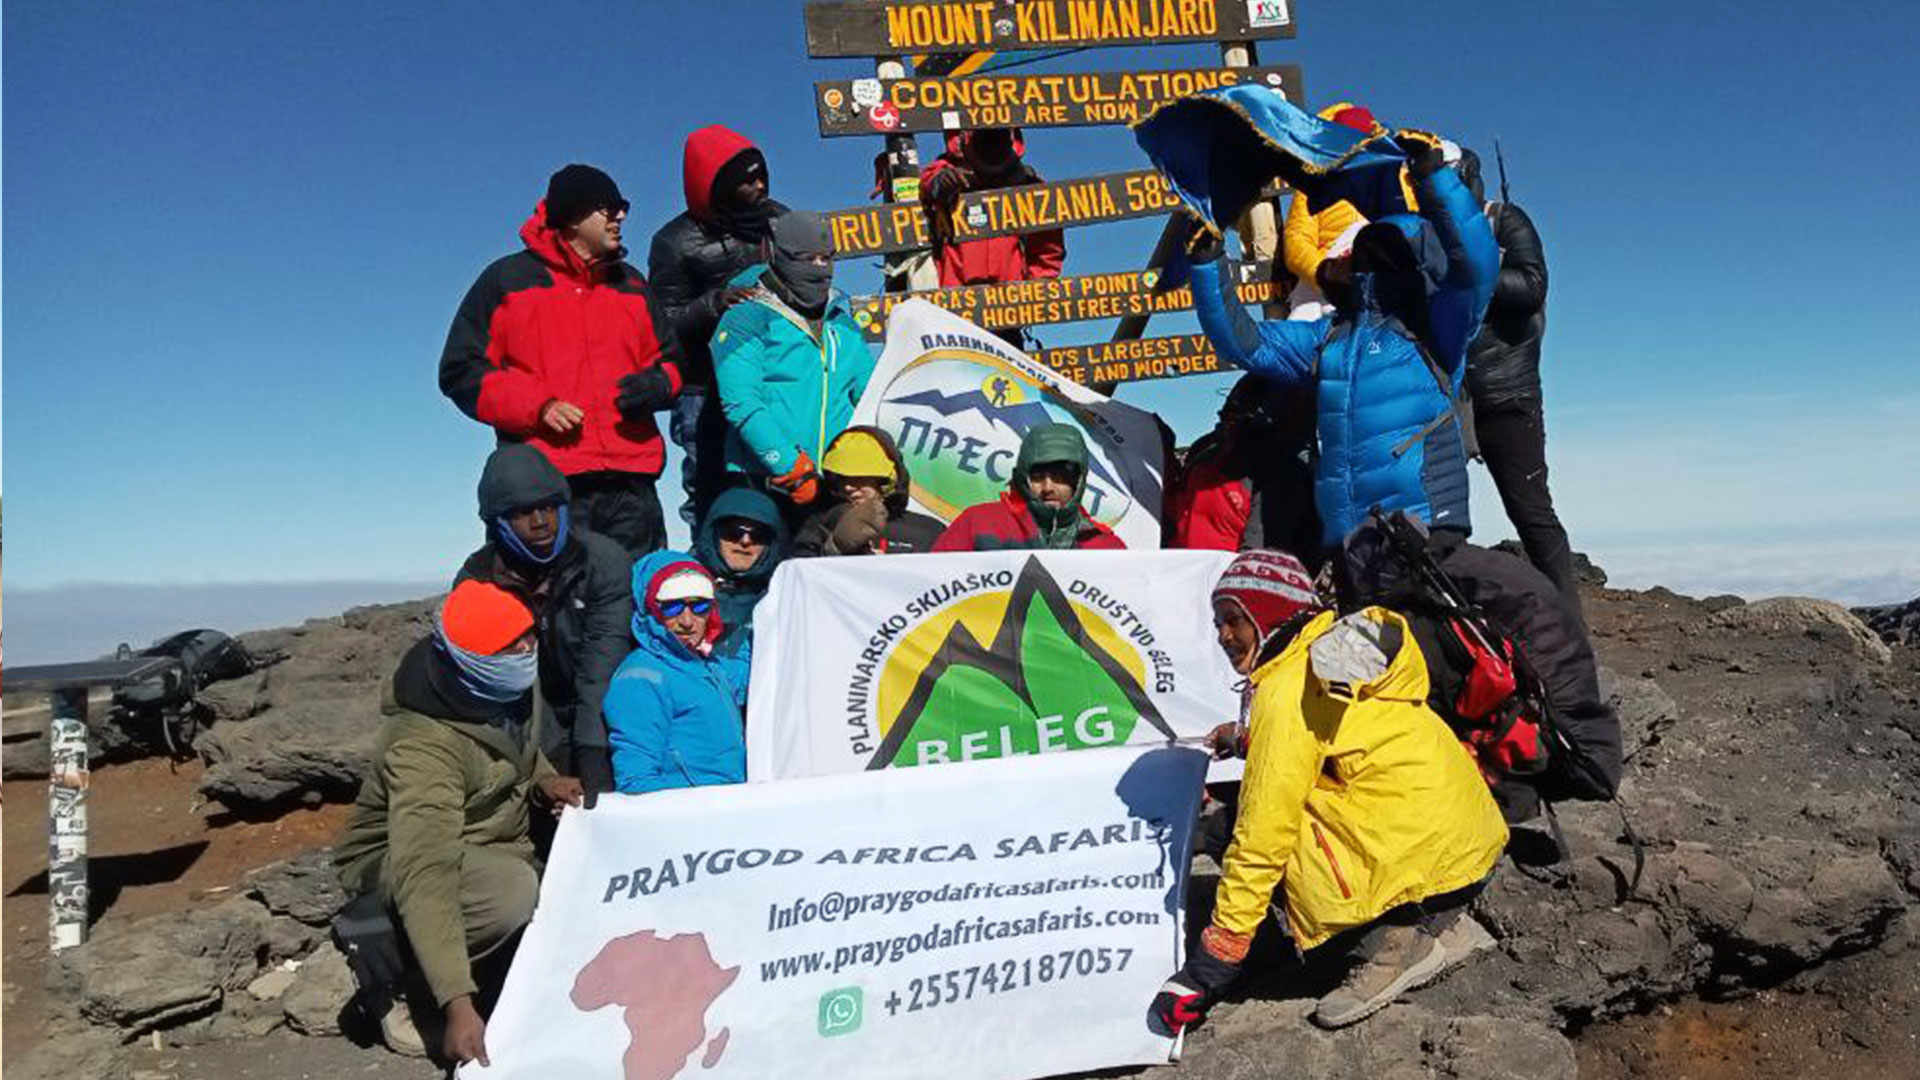 Kilimanjaro-climb-with-praygod